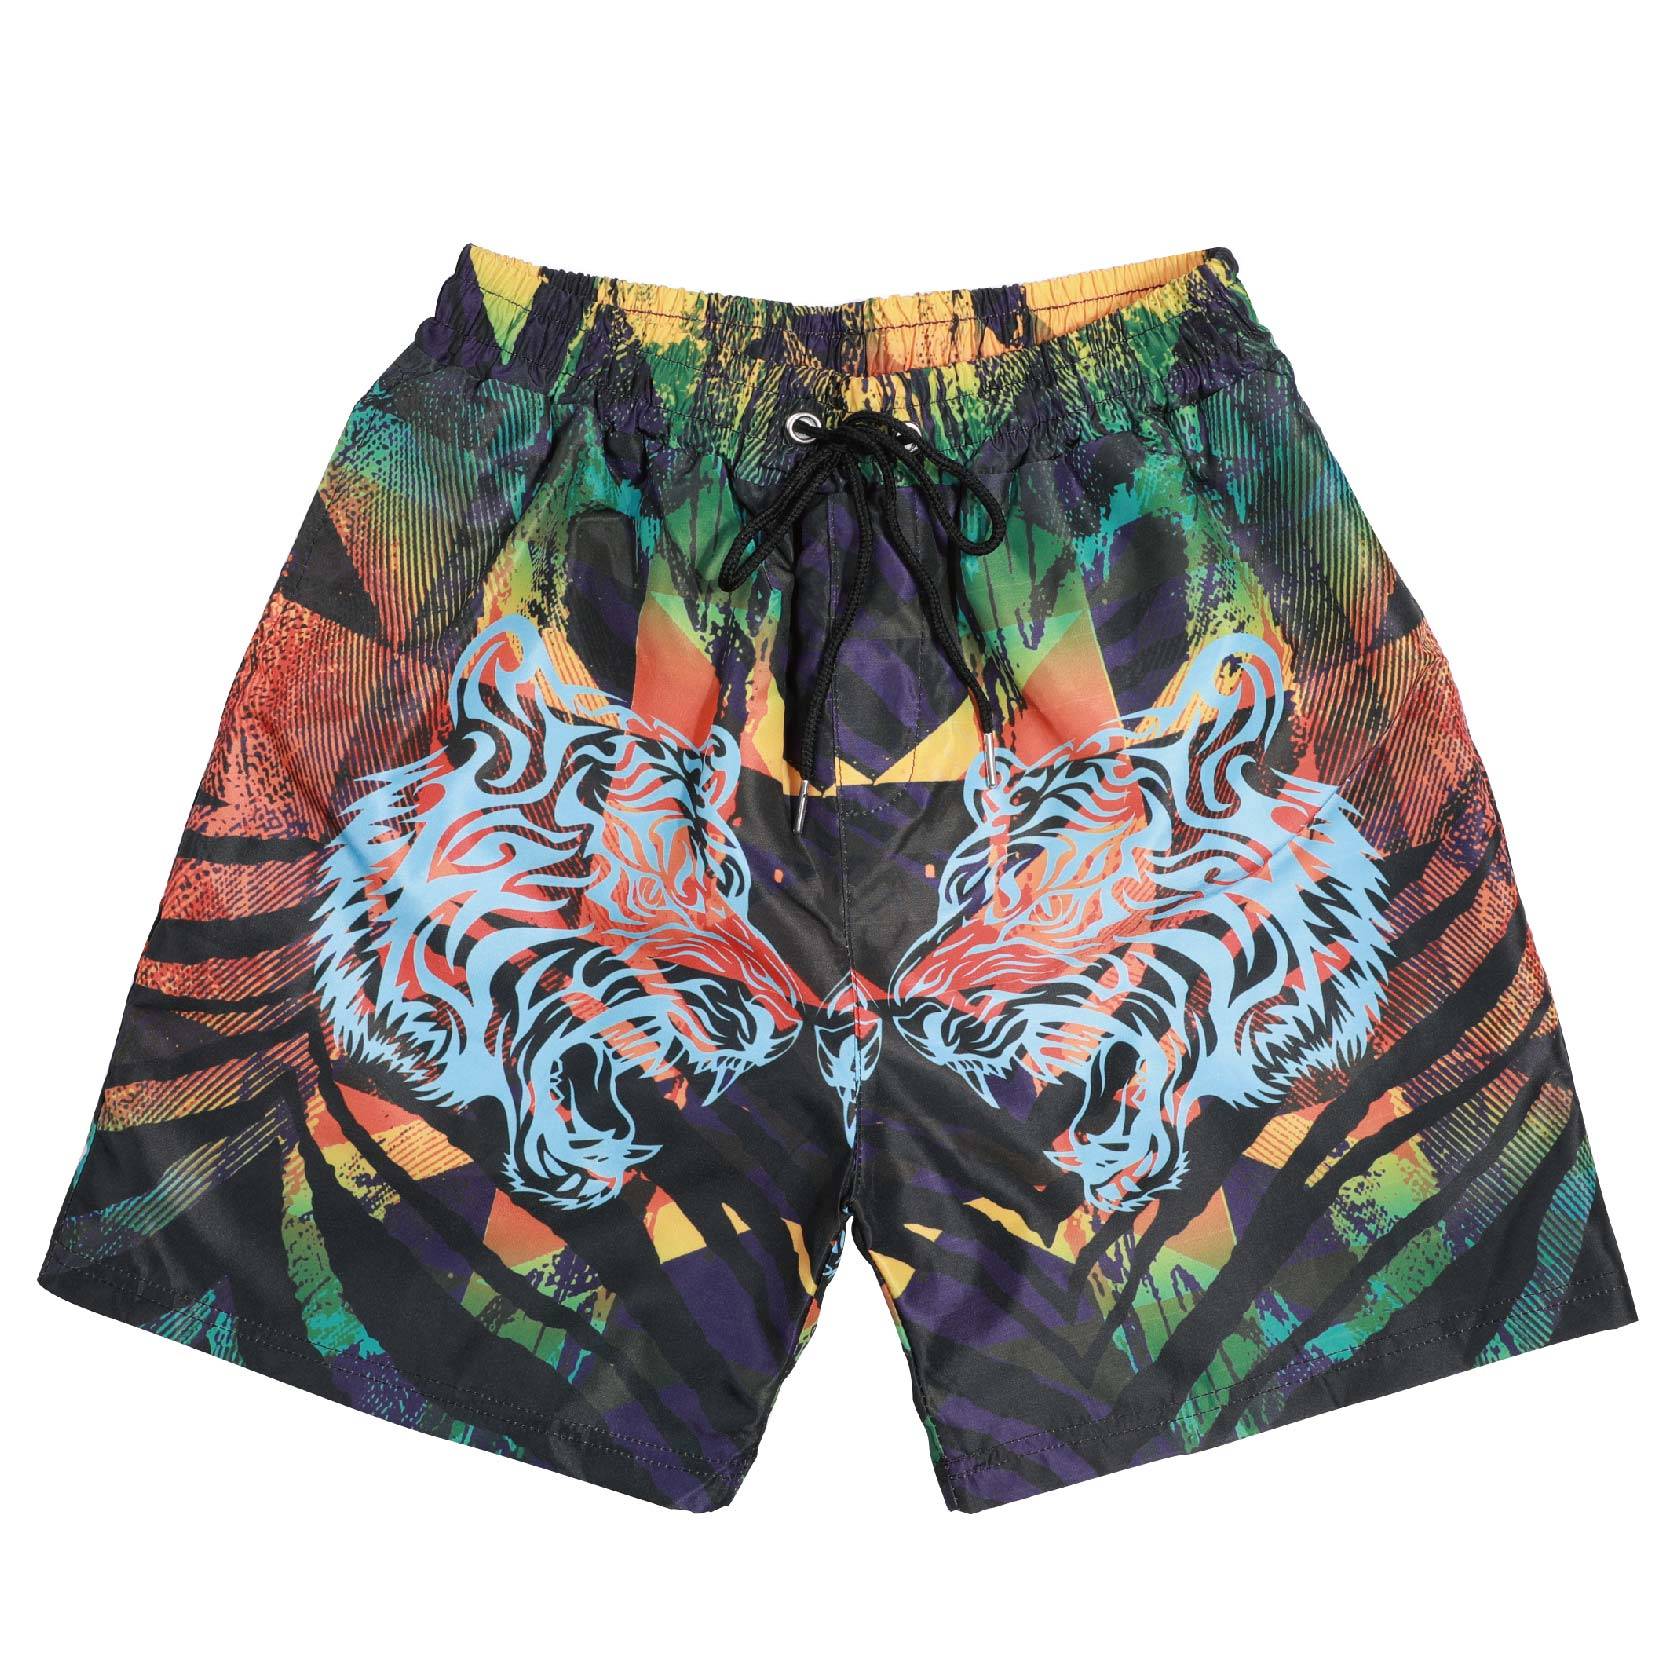 Wholesale Dealers of Cargo Pants For Men - Ngozi Beach Shorts Men Quick Dry Jaguar Printed Elastic Waist – Fullerton